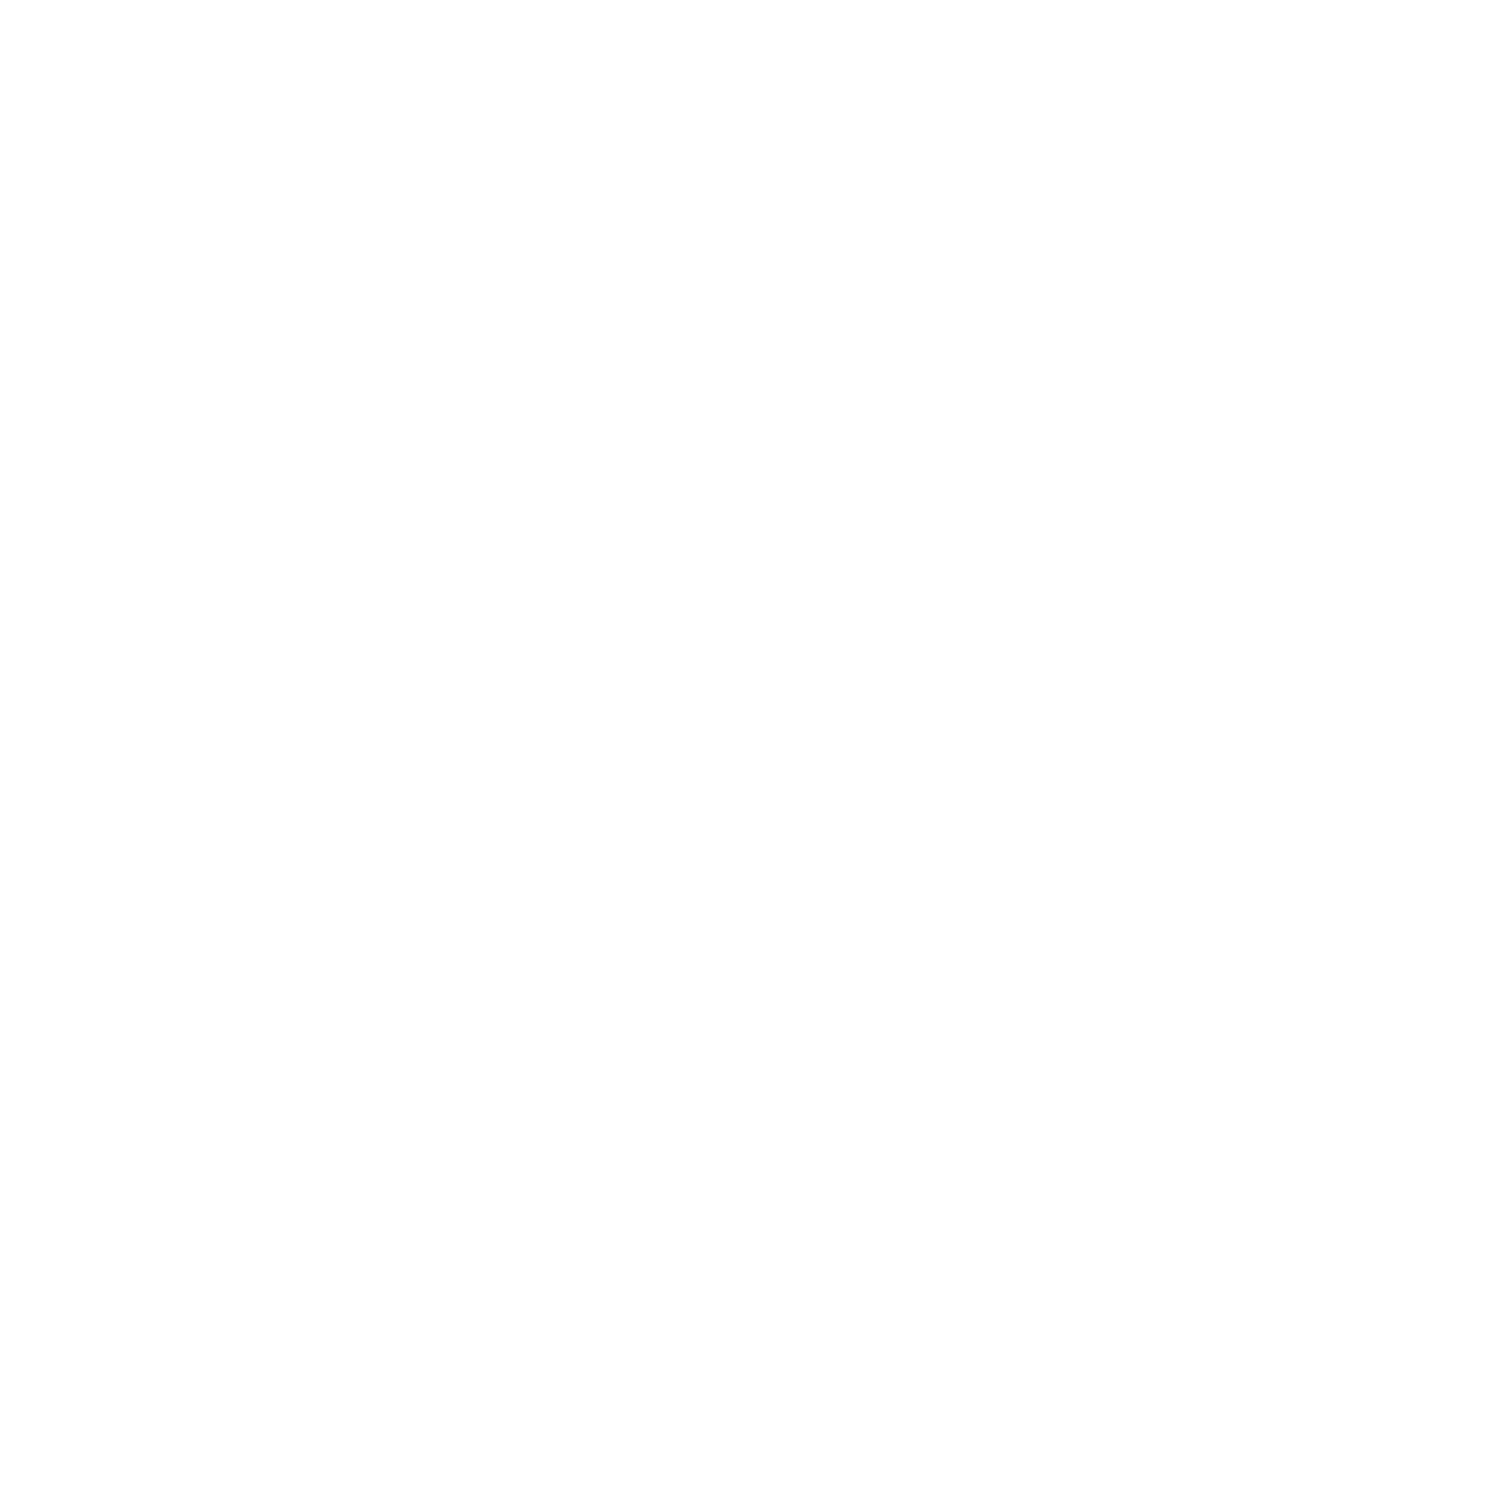 GenNXT Christian Student Camp